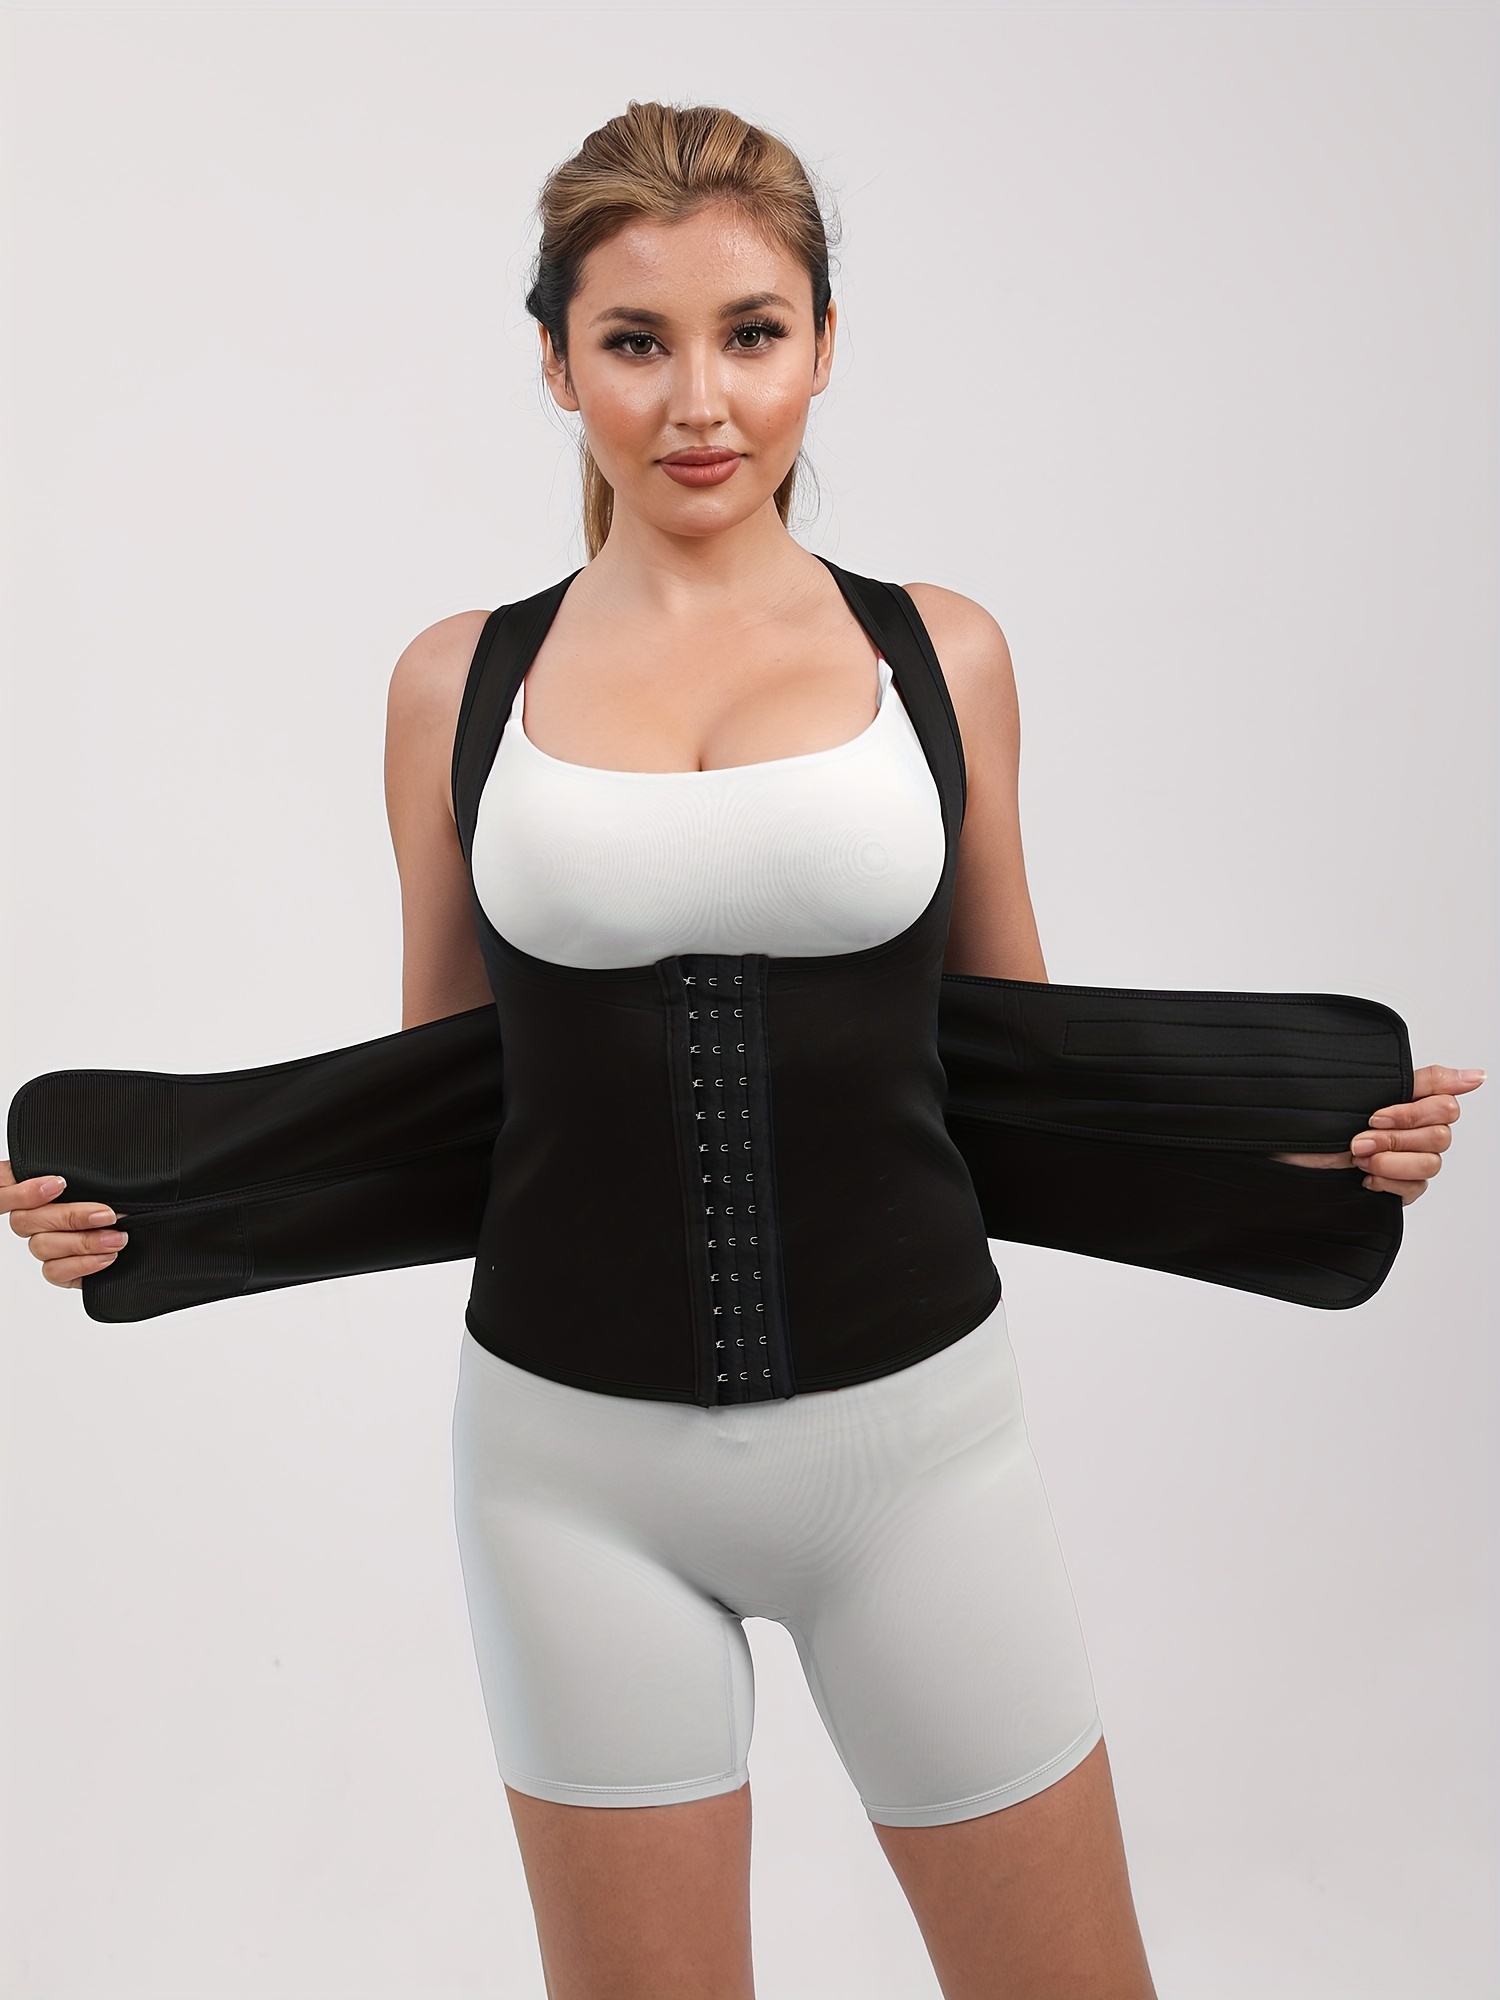 Neoprene Suit For Women Full Body Shaper Sport Sweat Sleeveless Adjustable  Strap Sauna Waist Trainer Bodysuit For Weight Loss